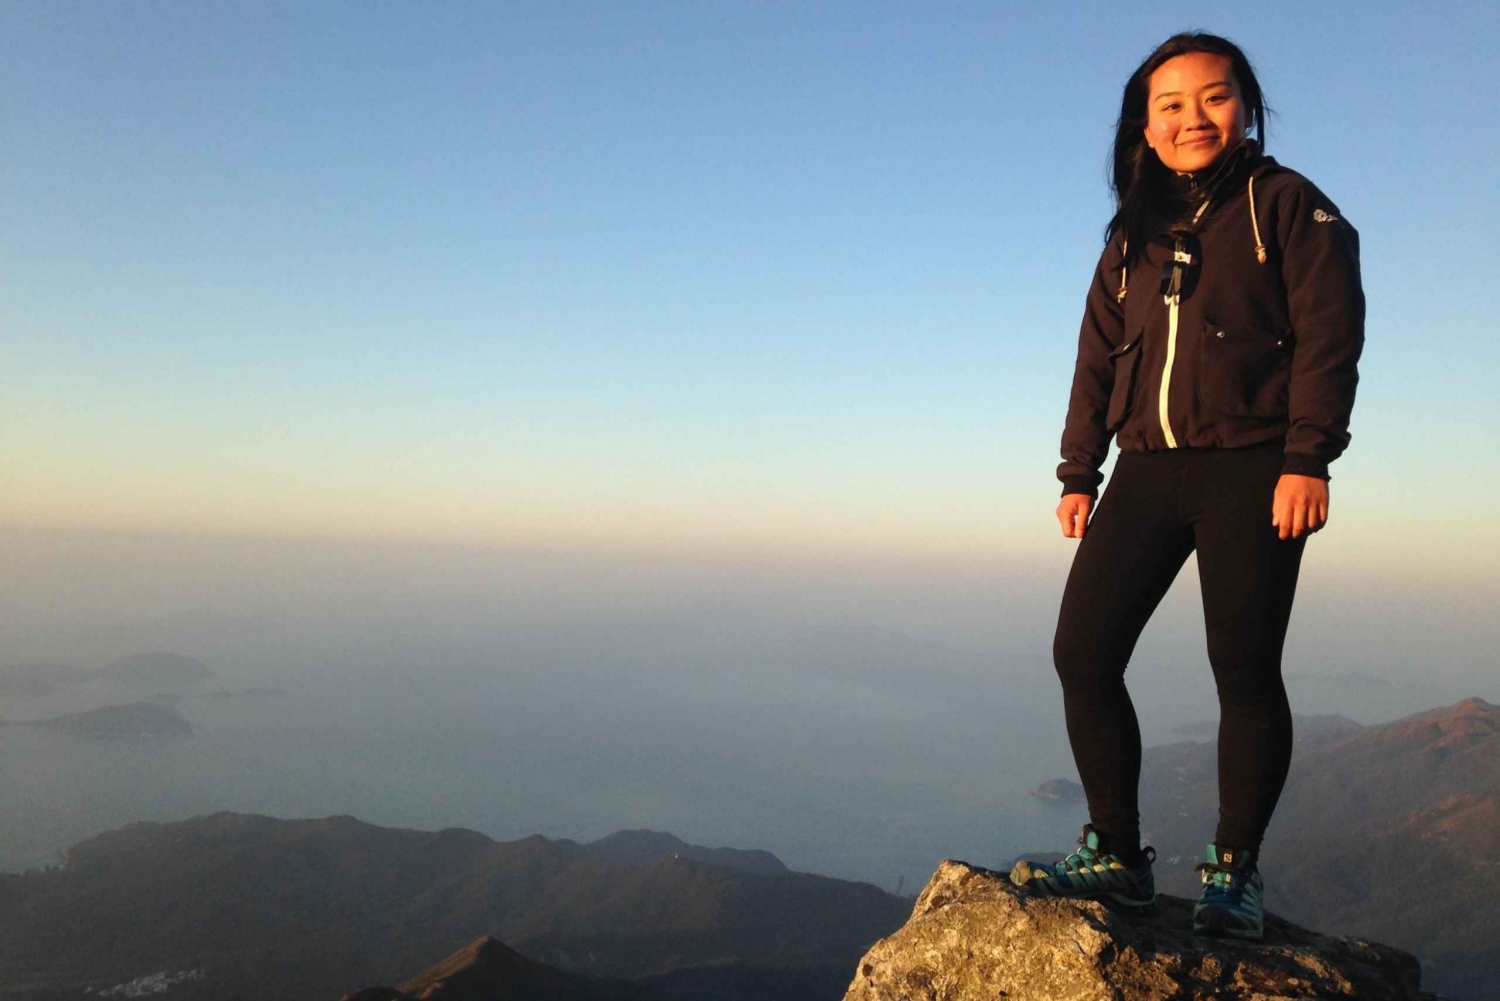 Hong Kong: Lantau Peak Sunrise Climb